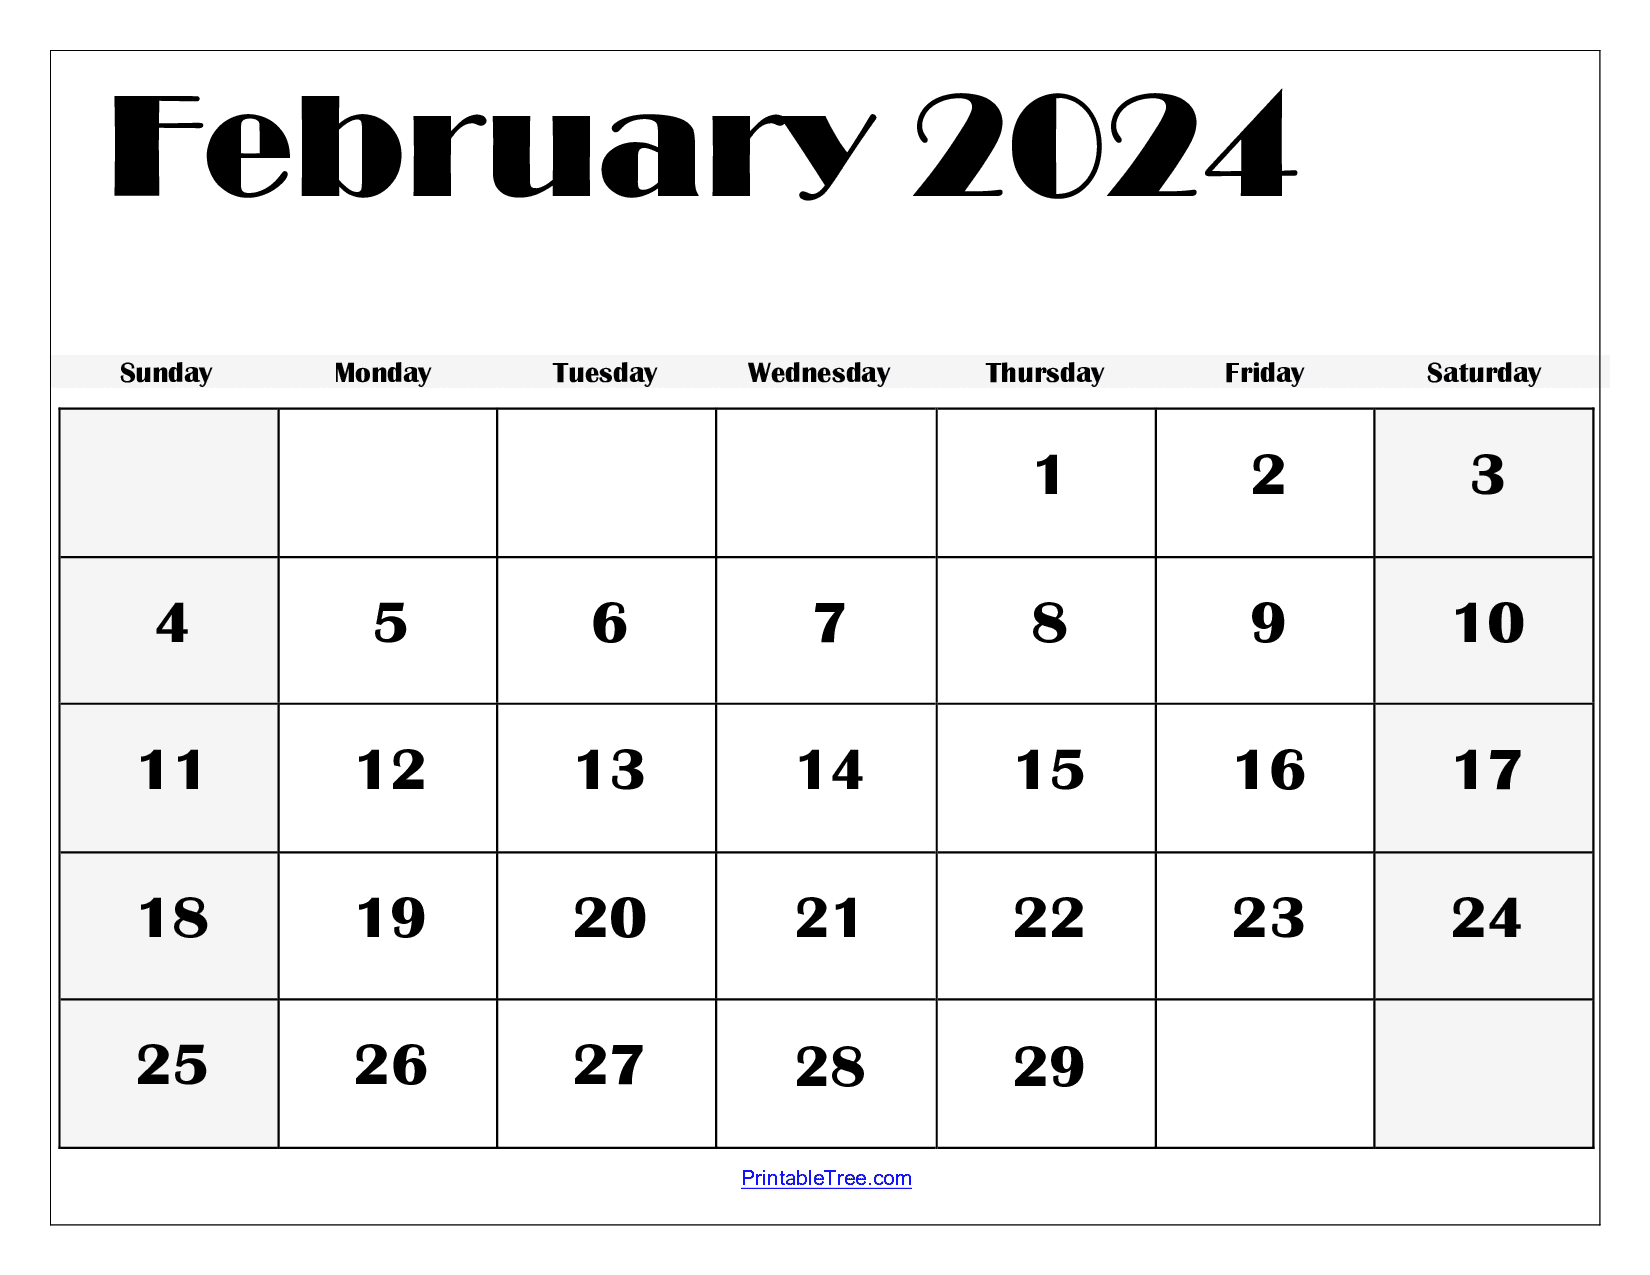 February 2024 Calendar Printable Pdf Template With Holidays for Calendar 2024 February Month Printable